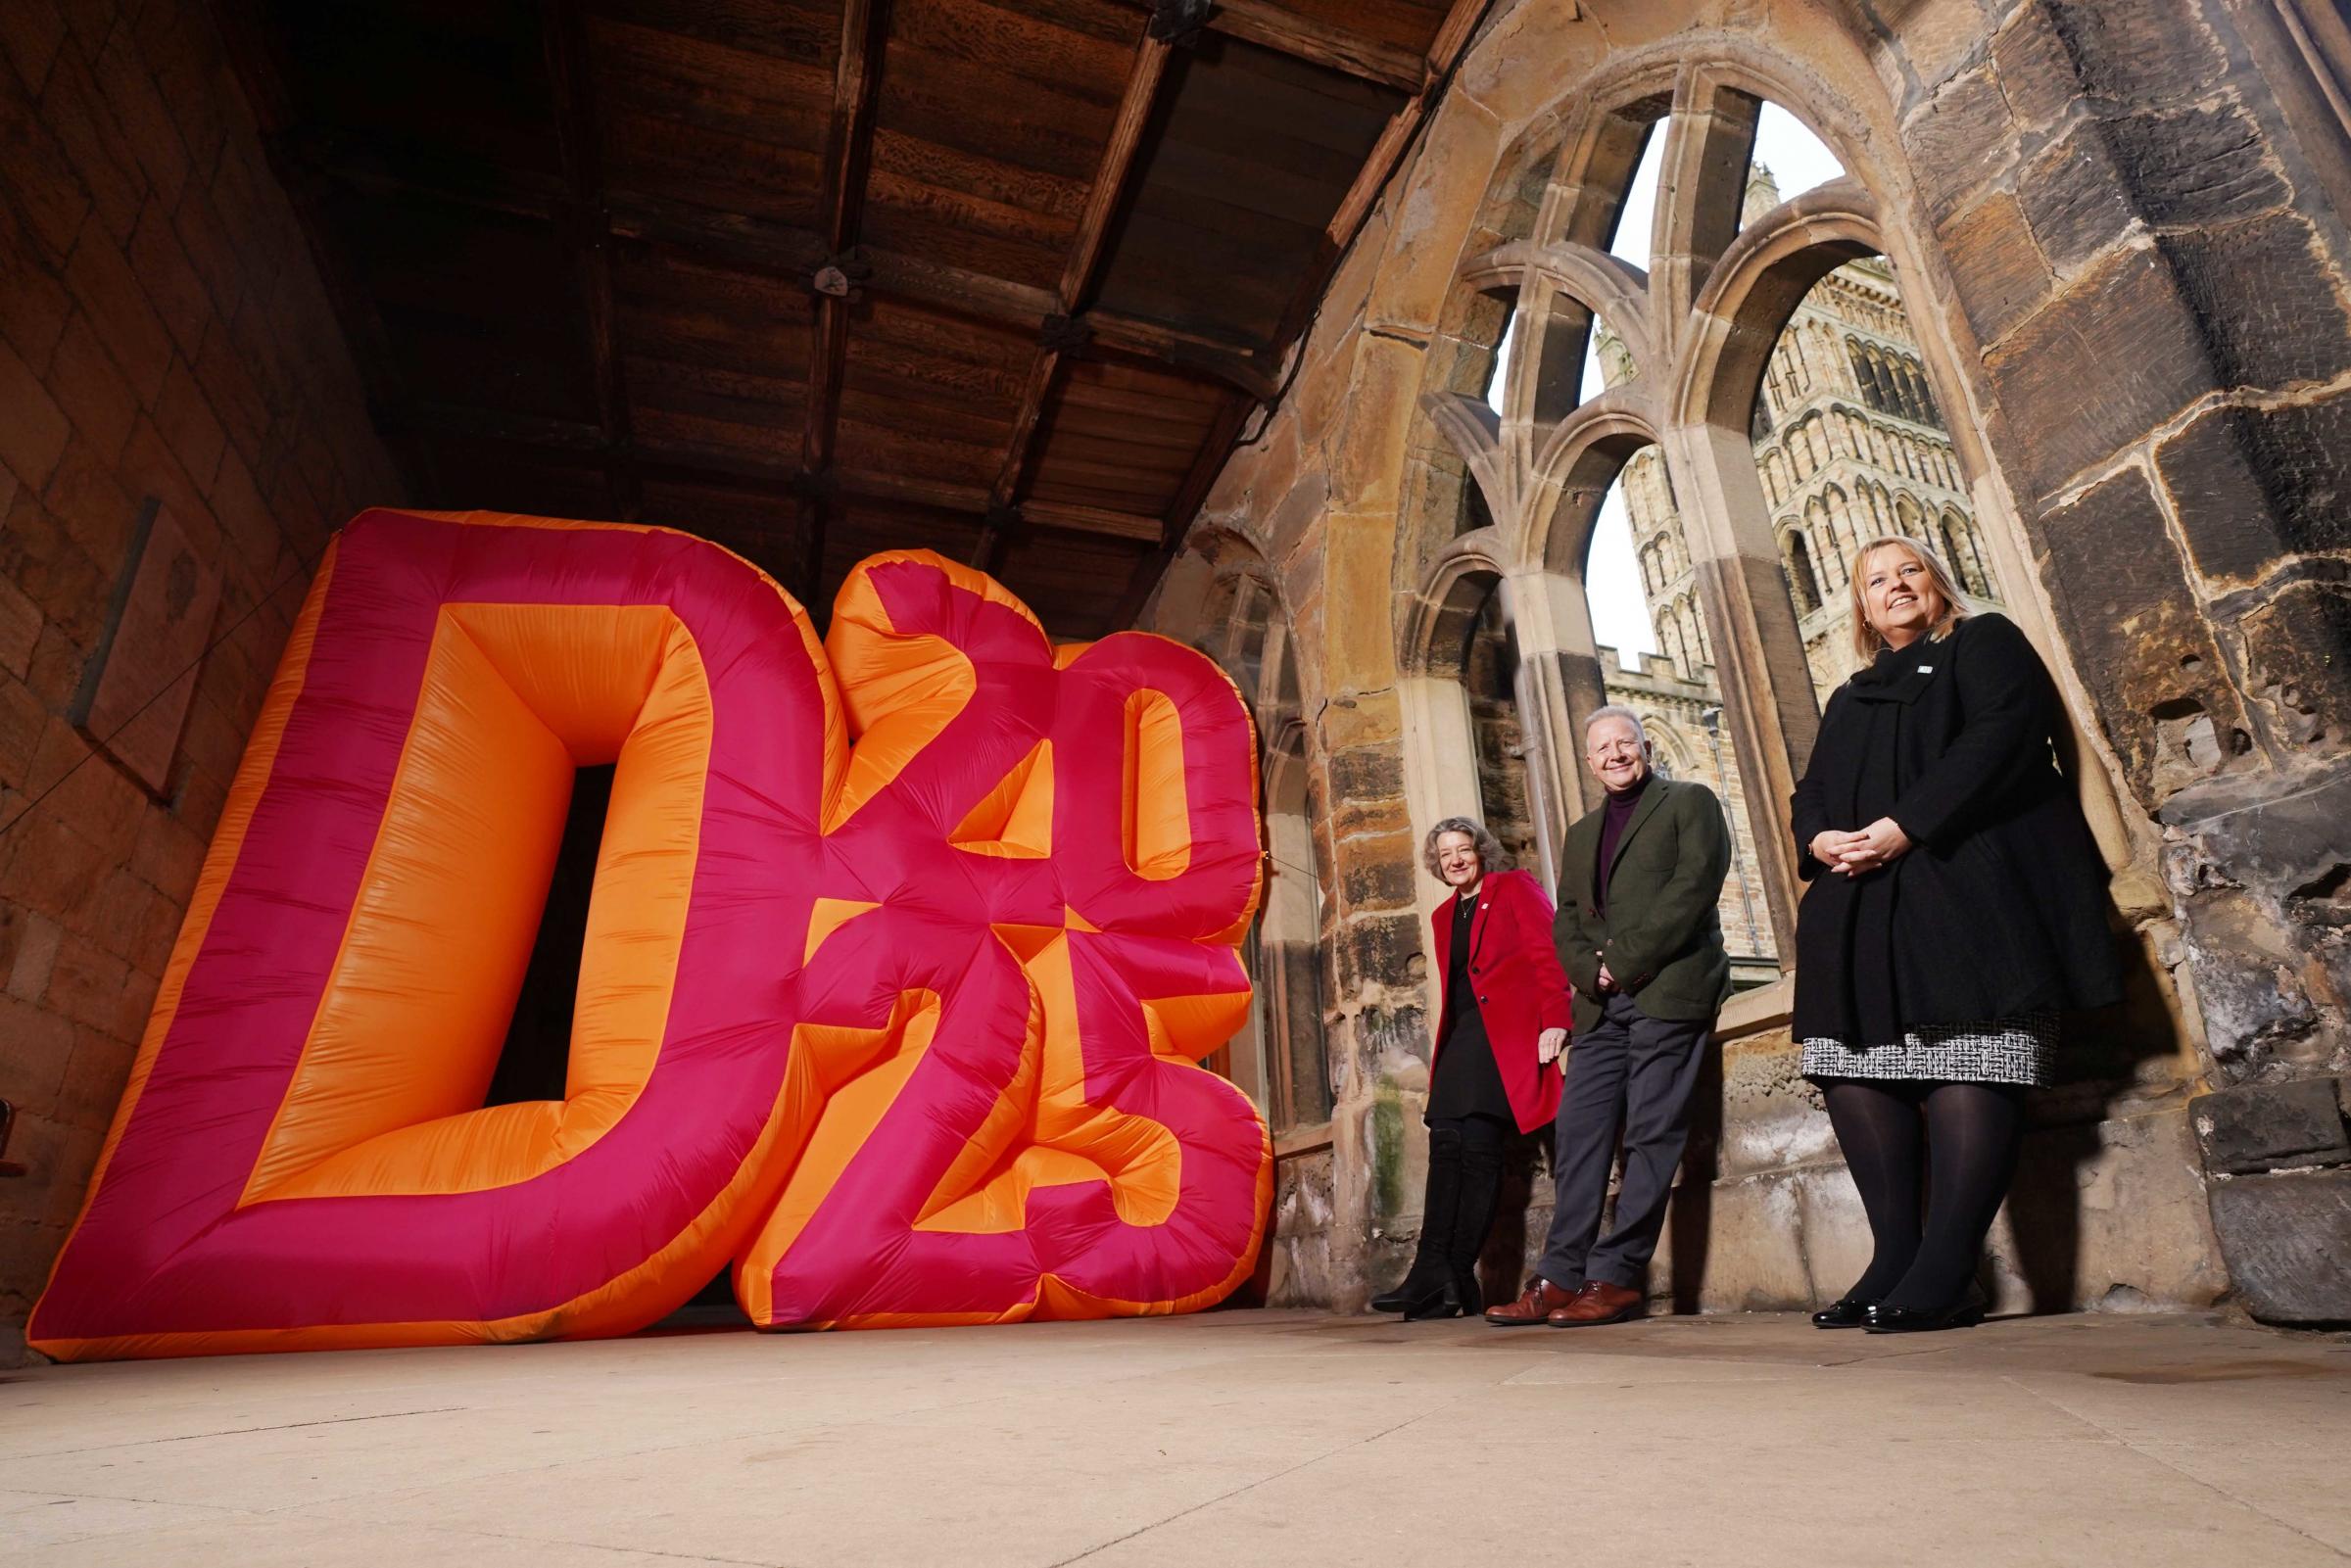 Durham culture bid will unite us all in bidding for a £740m prize